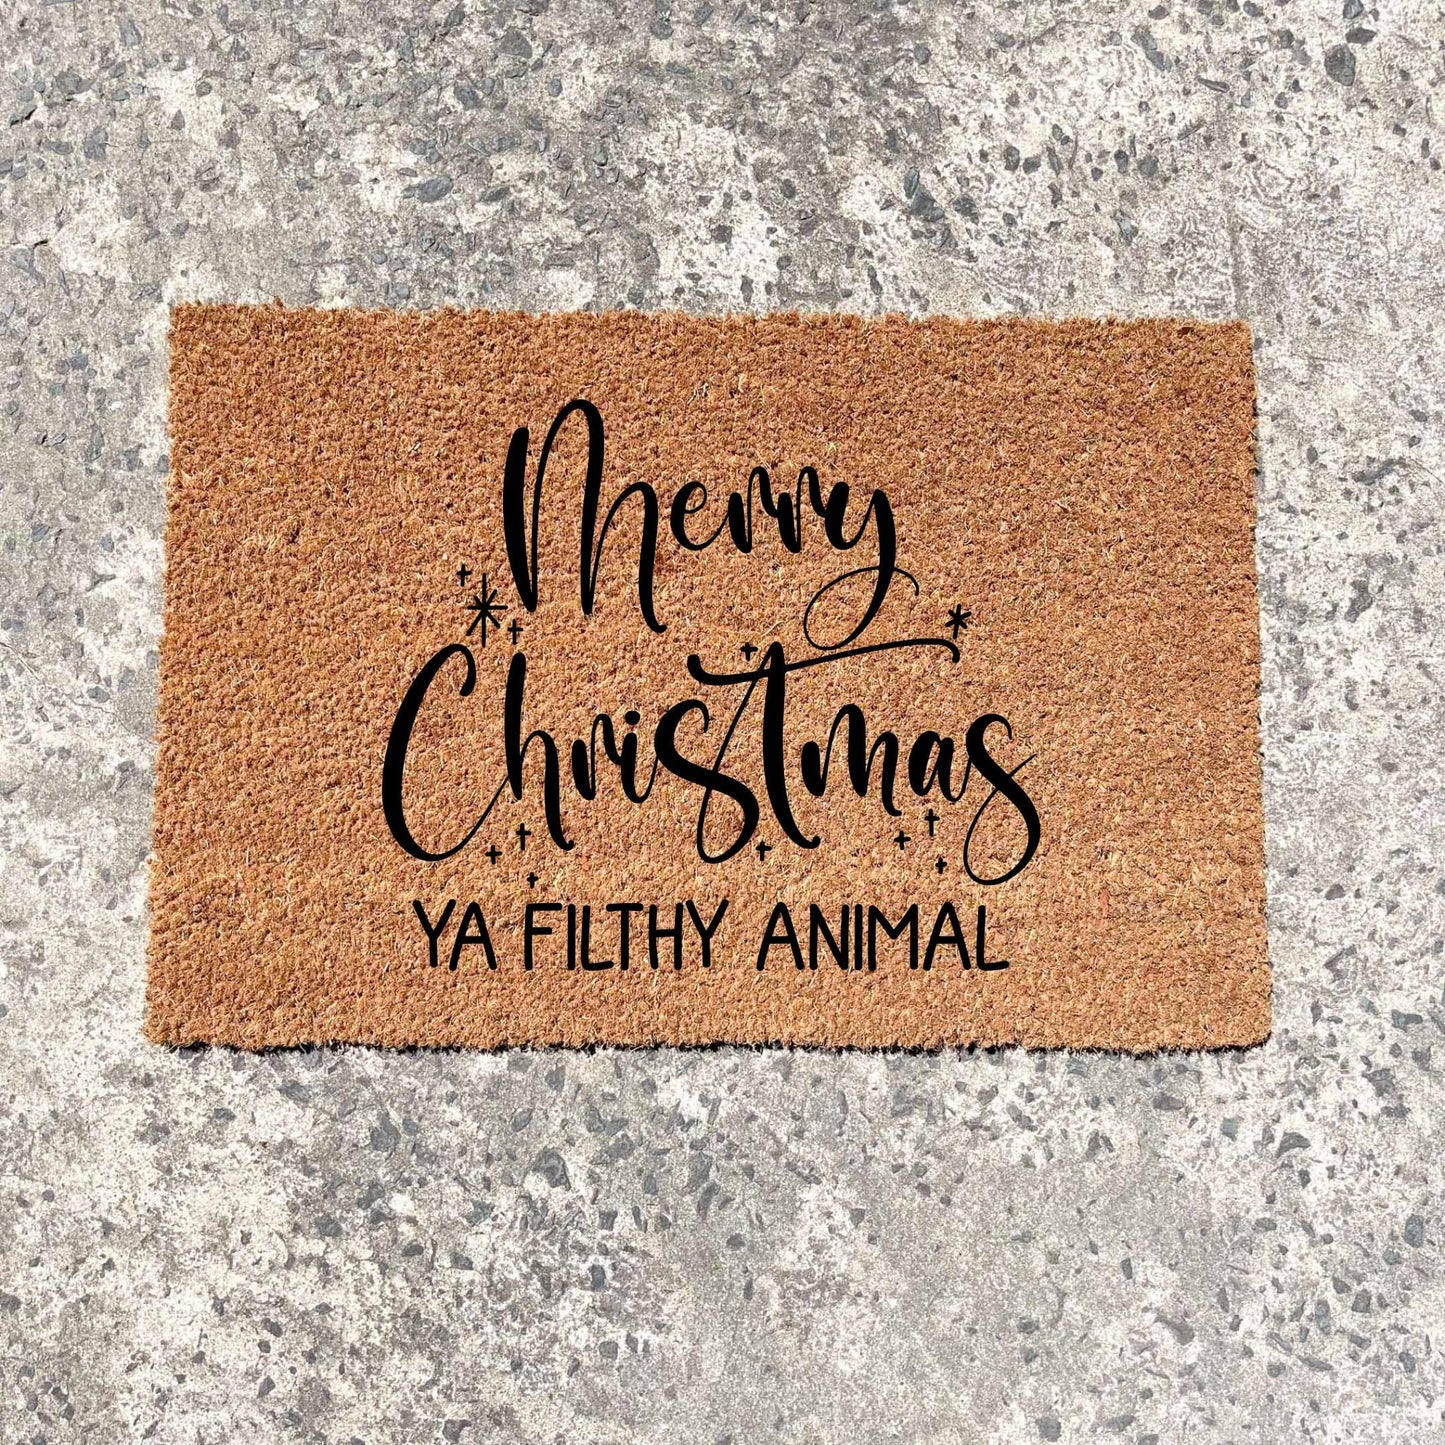 Merry Christmas ya filthy animal doormat, Christmas doormat, Seasonal Doormat, Holidays Doormat